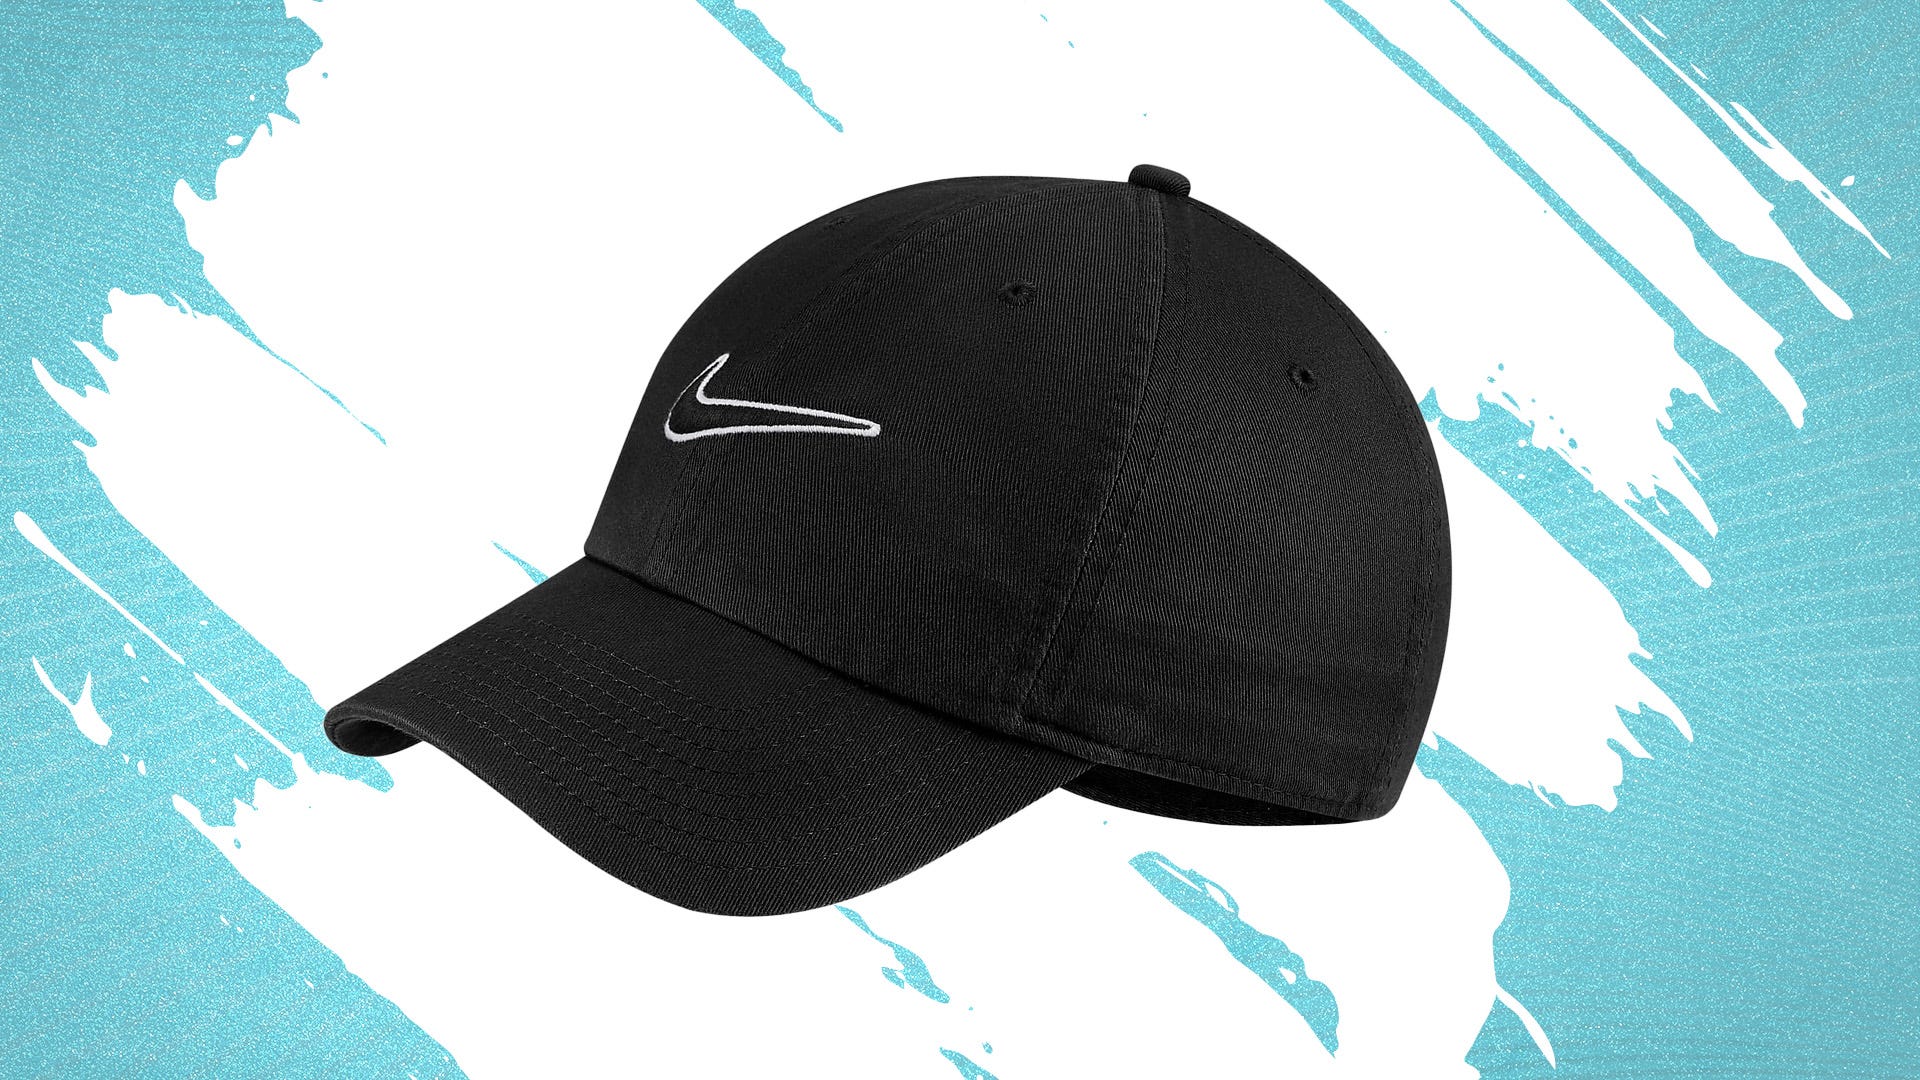 Nike sportswear heritage 86 cap